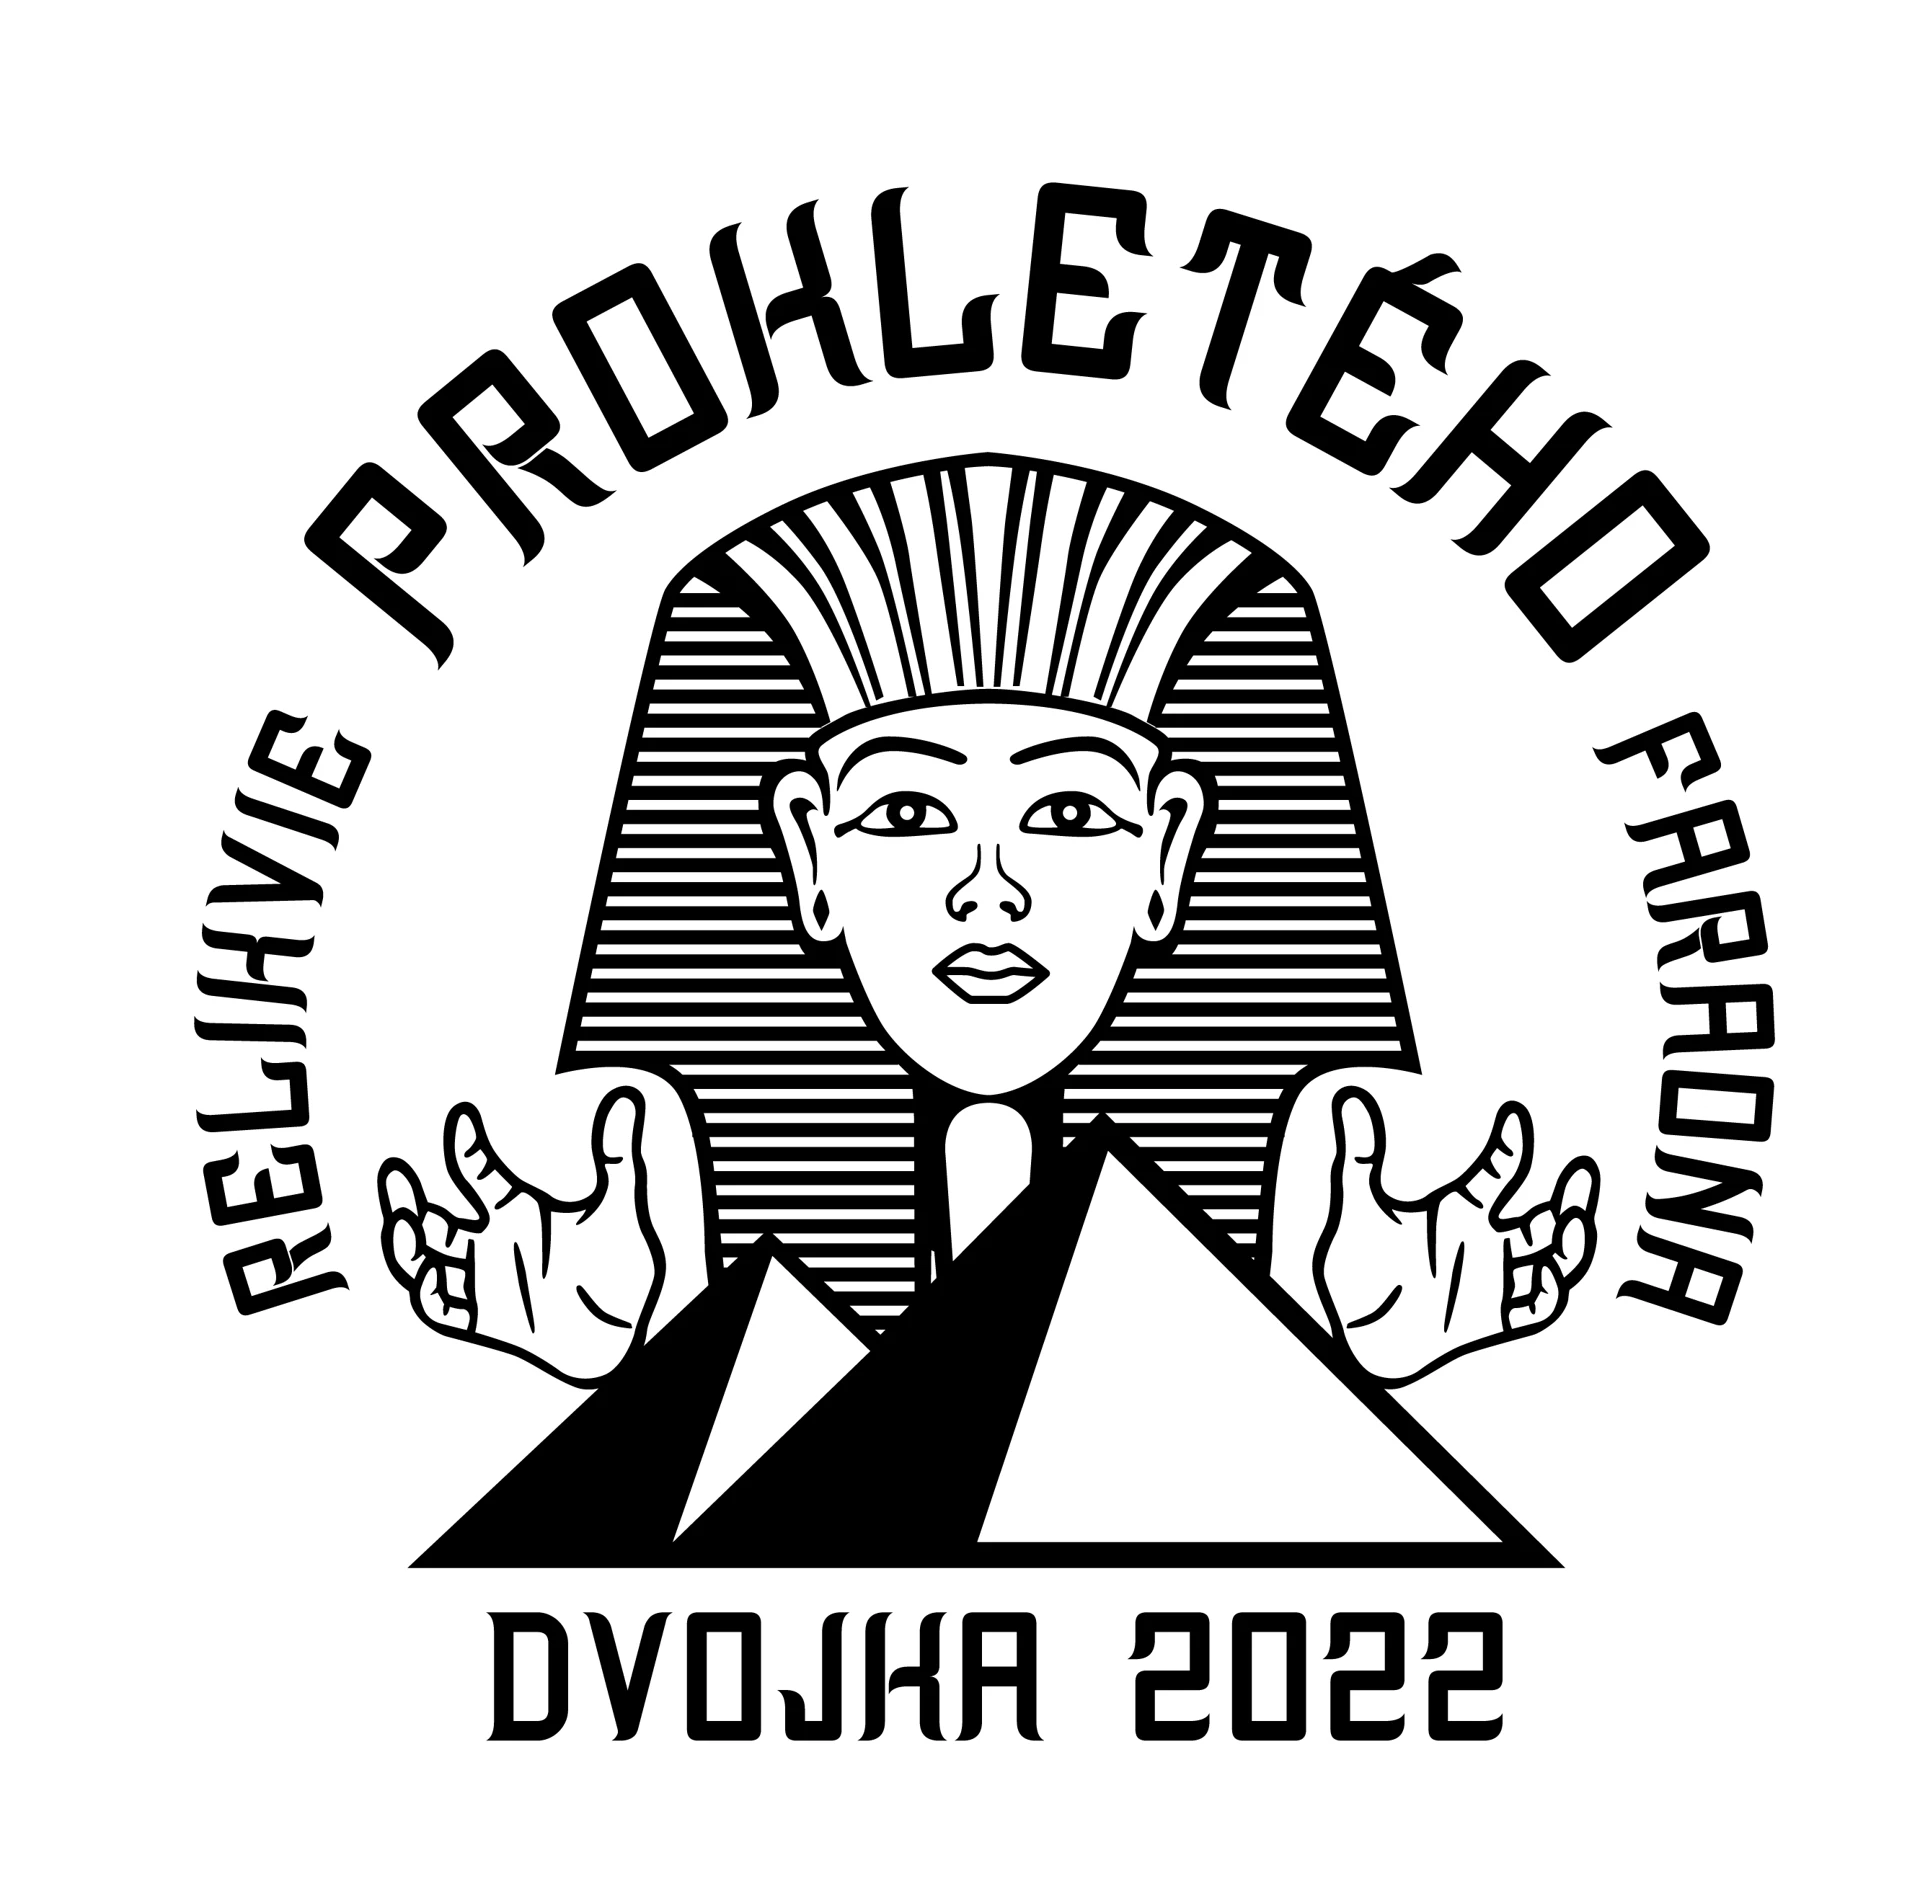 Tábor Dvojka - Kronika - Logo - Relikvie prokletého faraona